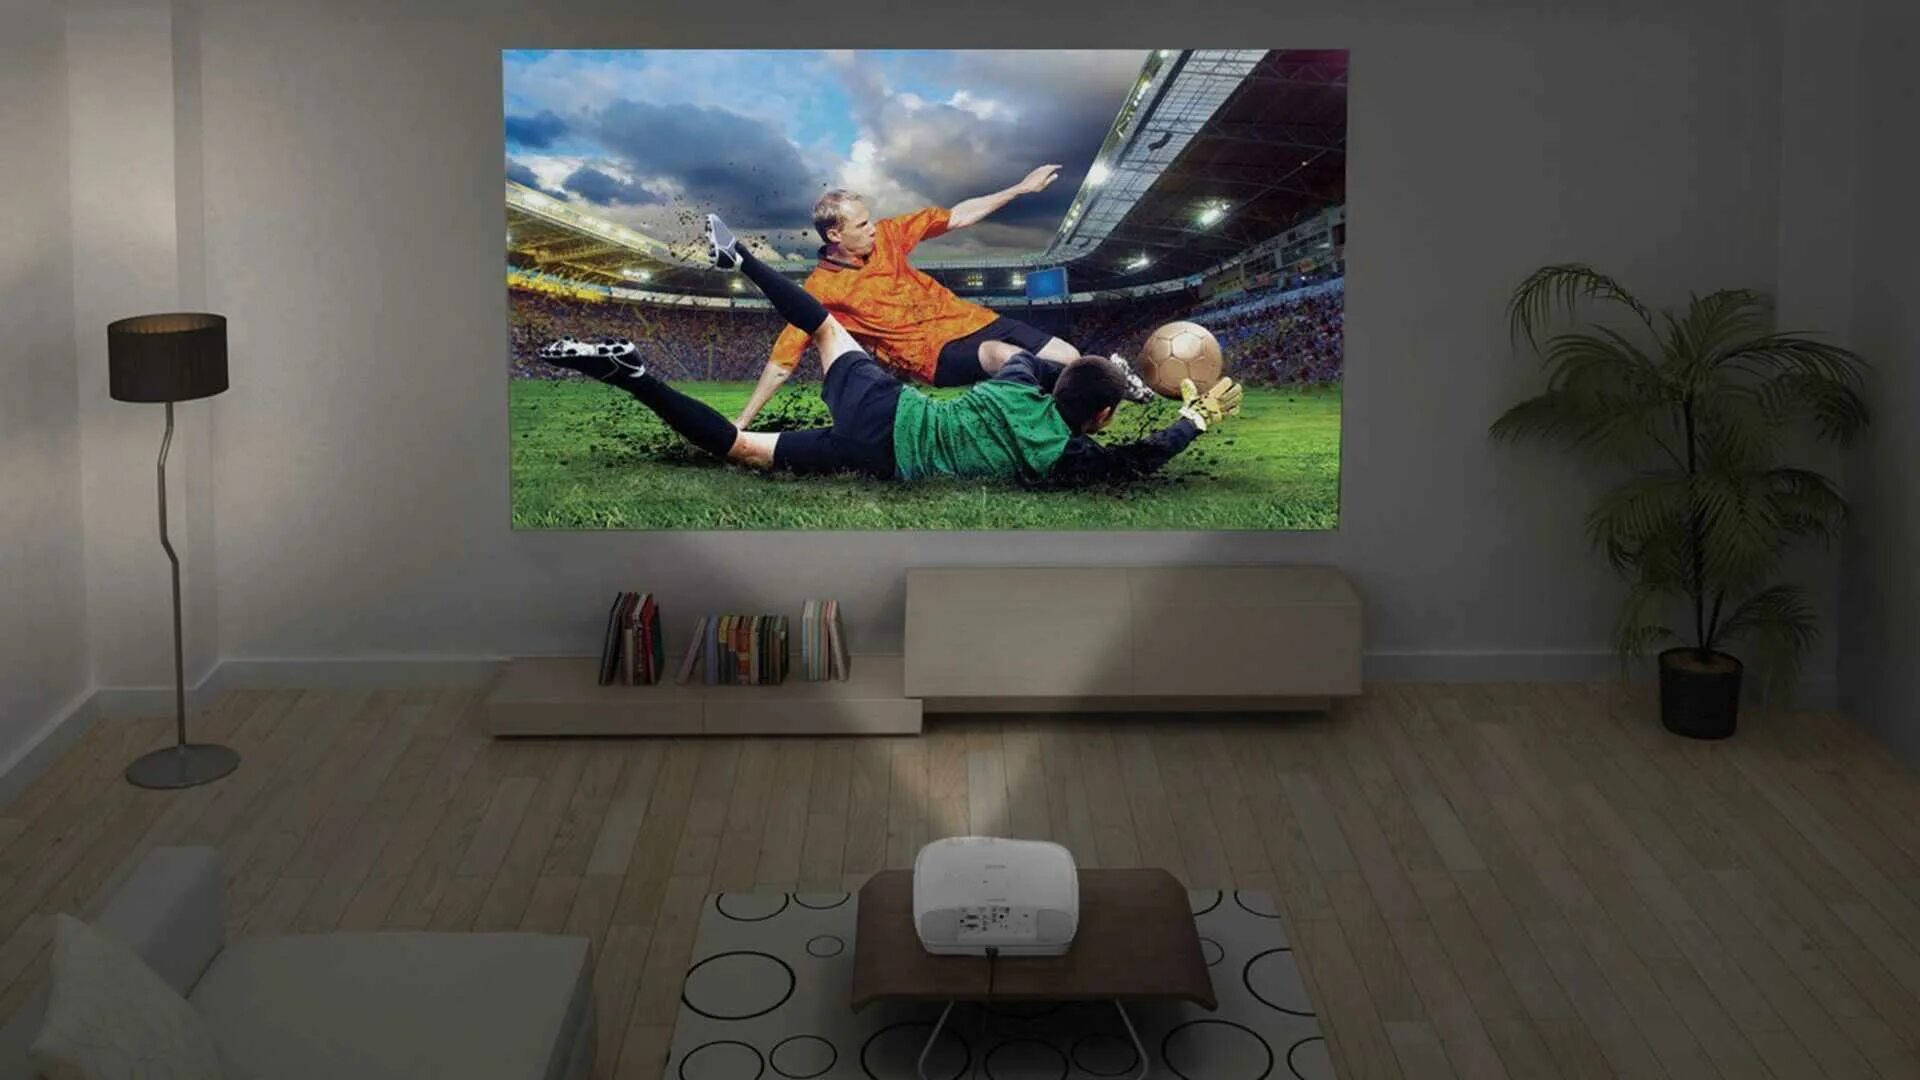 Проектор или телевизор что лучше. Телевизор проектор на стену. Изображение с проектора. Проектор на стену дома. Проектор vs телевизор.